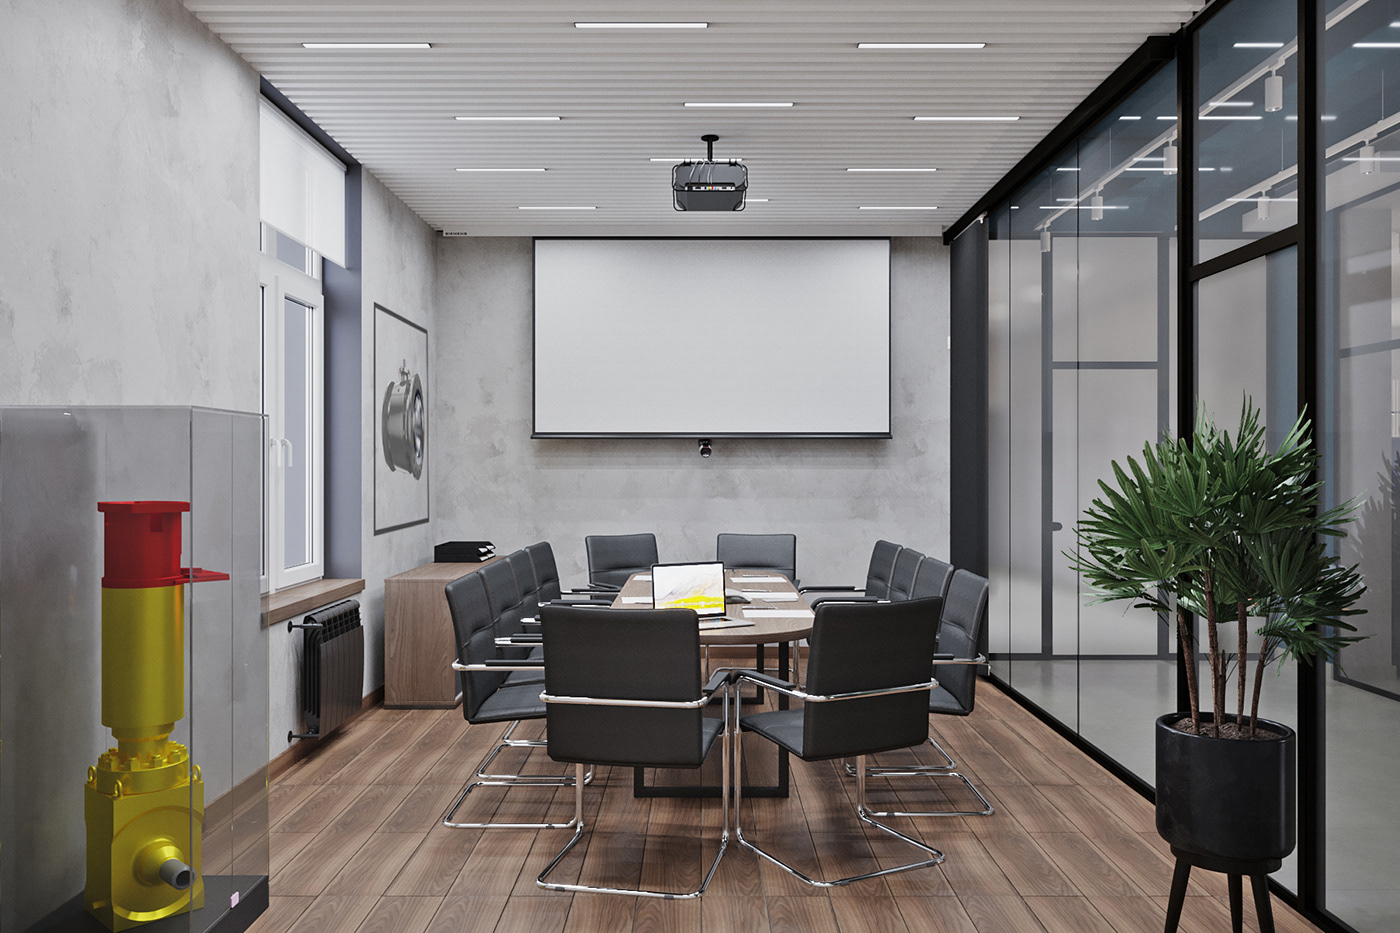 3ds max architecture design Interior Office Project visualization визуализация дизайн интерьера офис